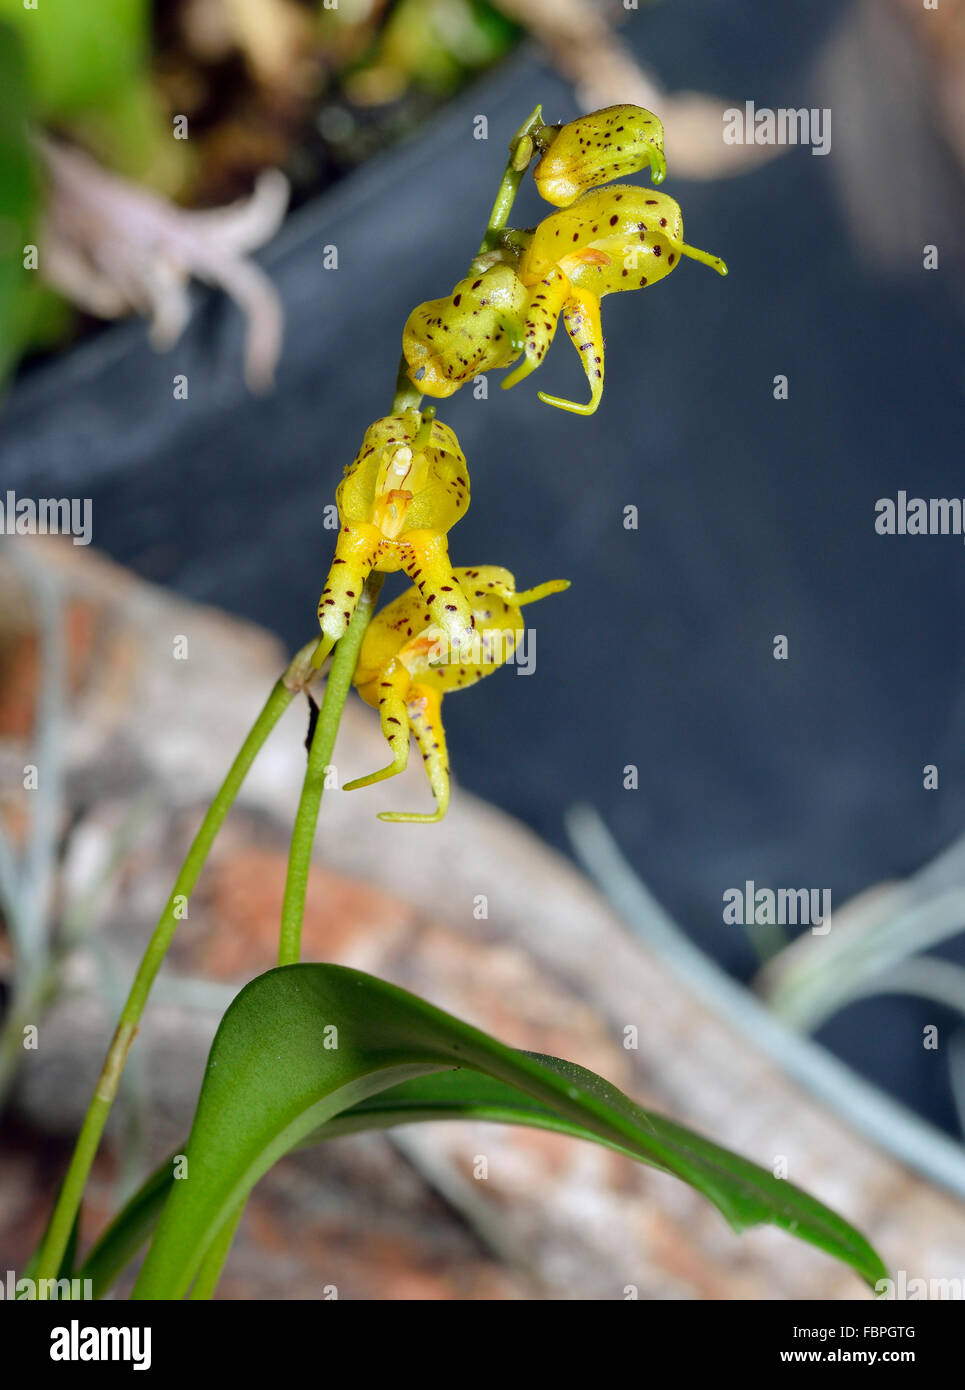 Many-Spotted Masdevallia Orchid - Masdevallia polysticta Yellow form, from Ecuador and Peru Stock Photo